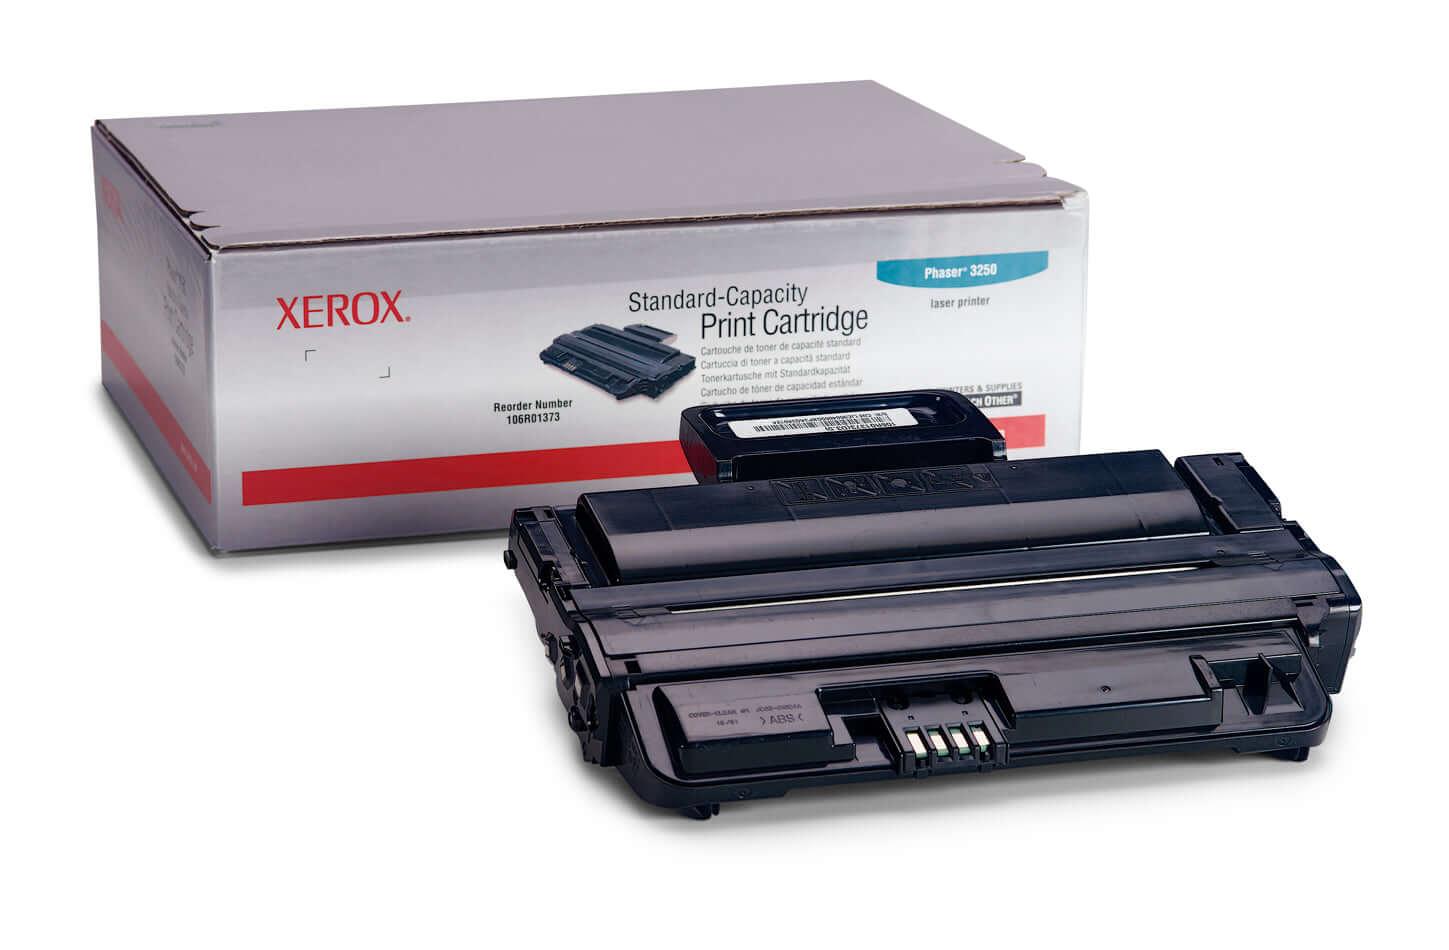 Xerox Phaser 3250 Black Toner cartridge 106R01373 - 3,500 yield